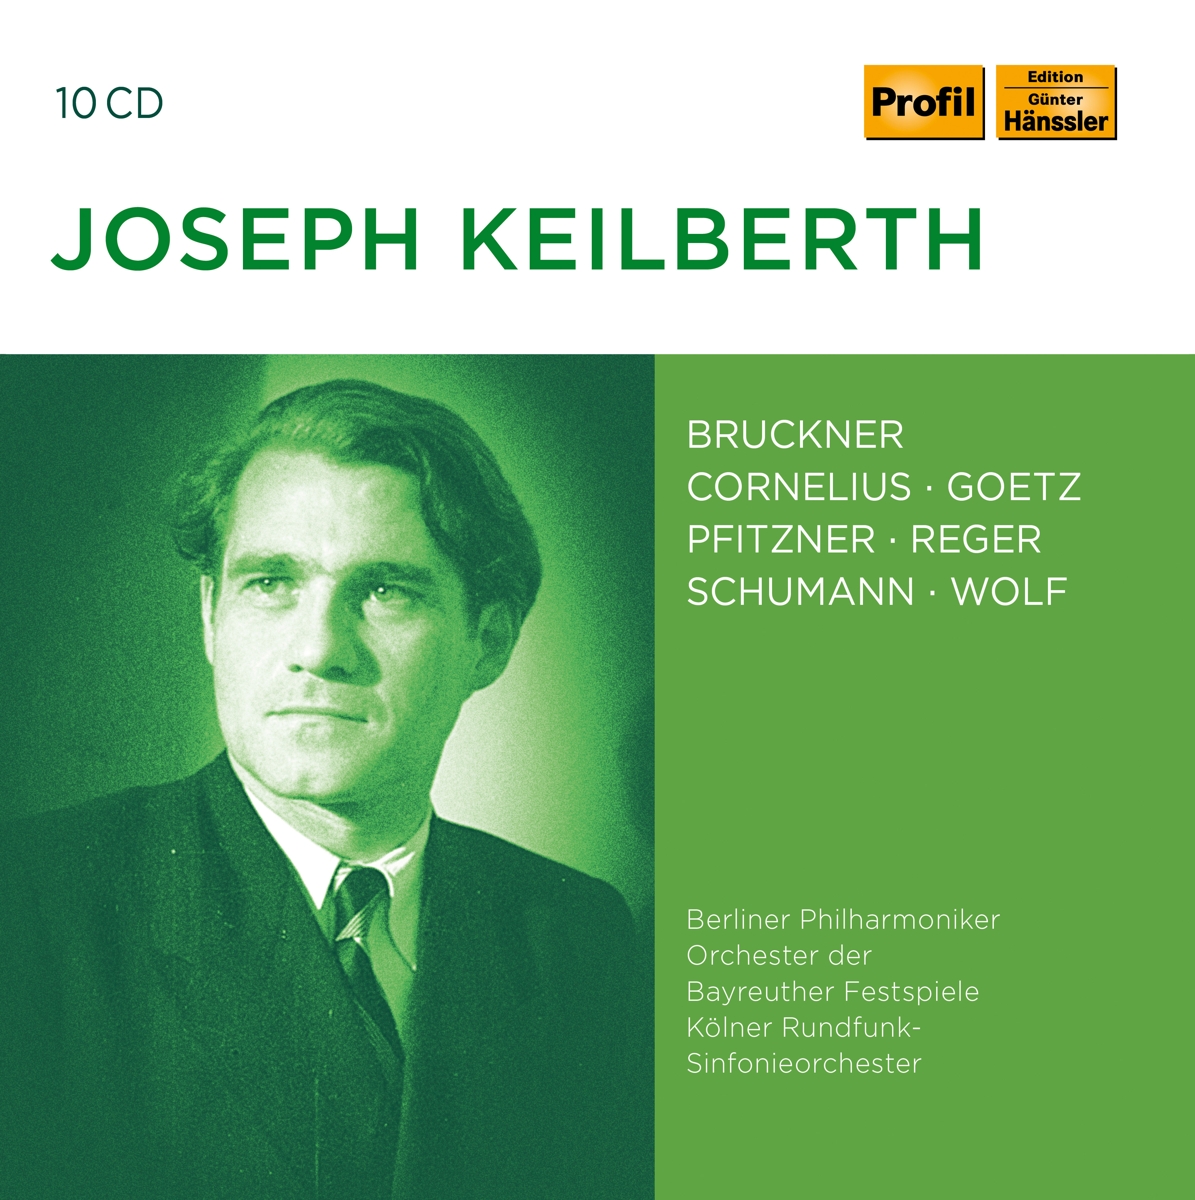 Joseph Keilberth: The Romantic Side of Classic